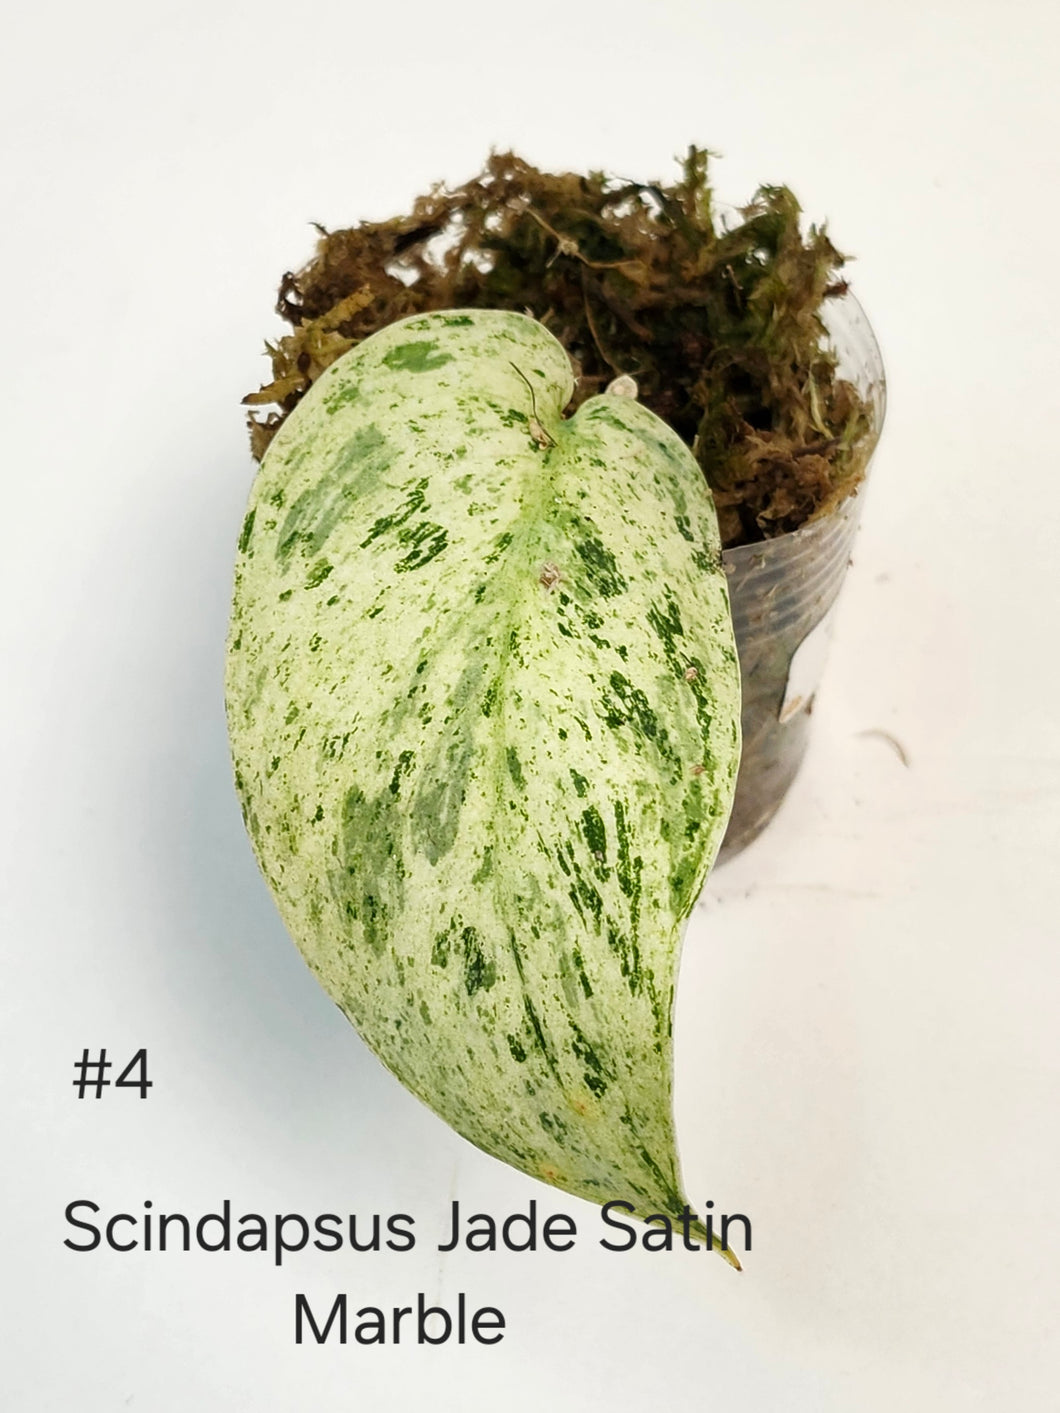 Scindapsus jade satin marble #4